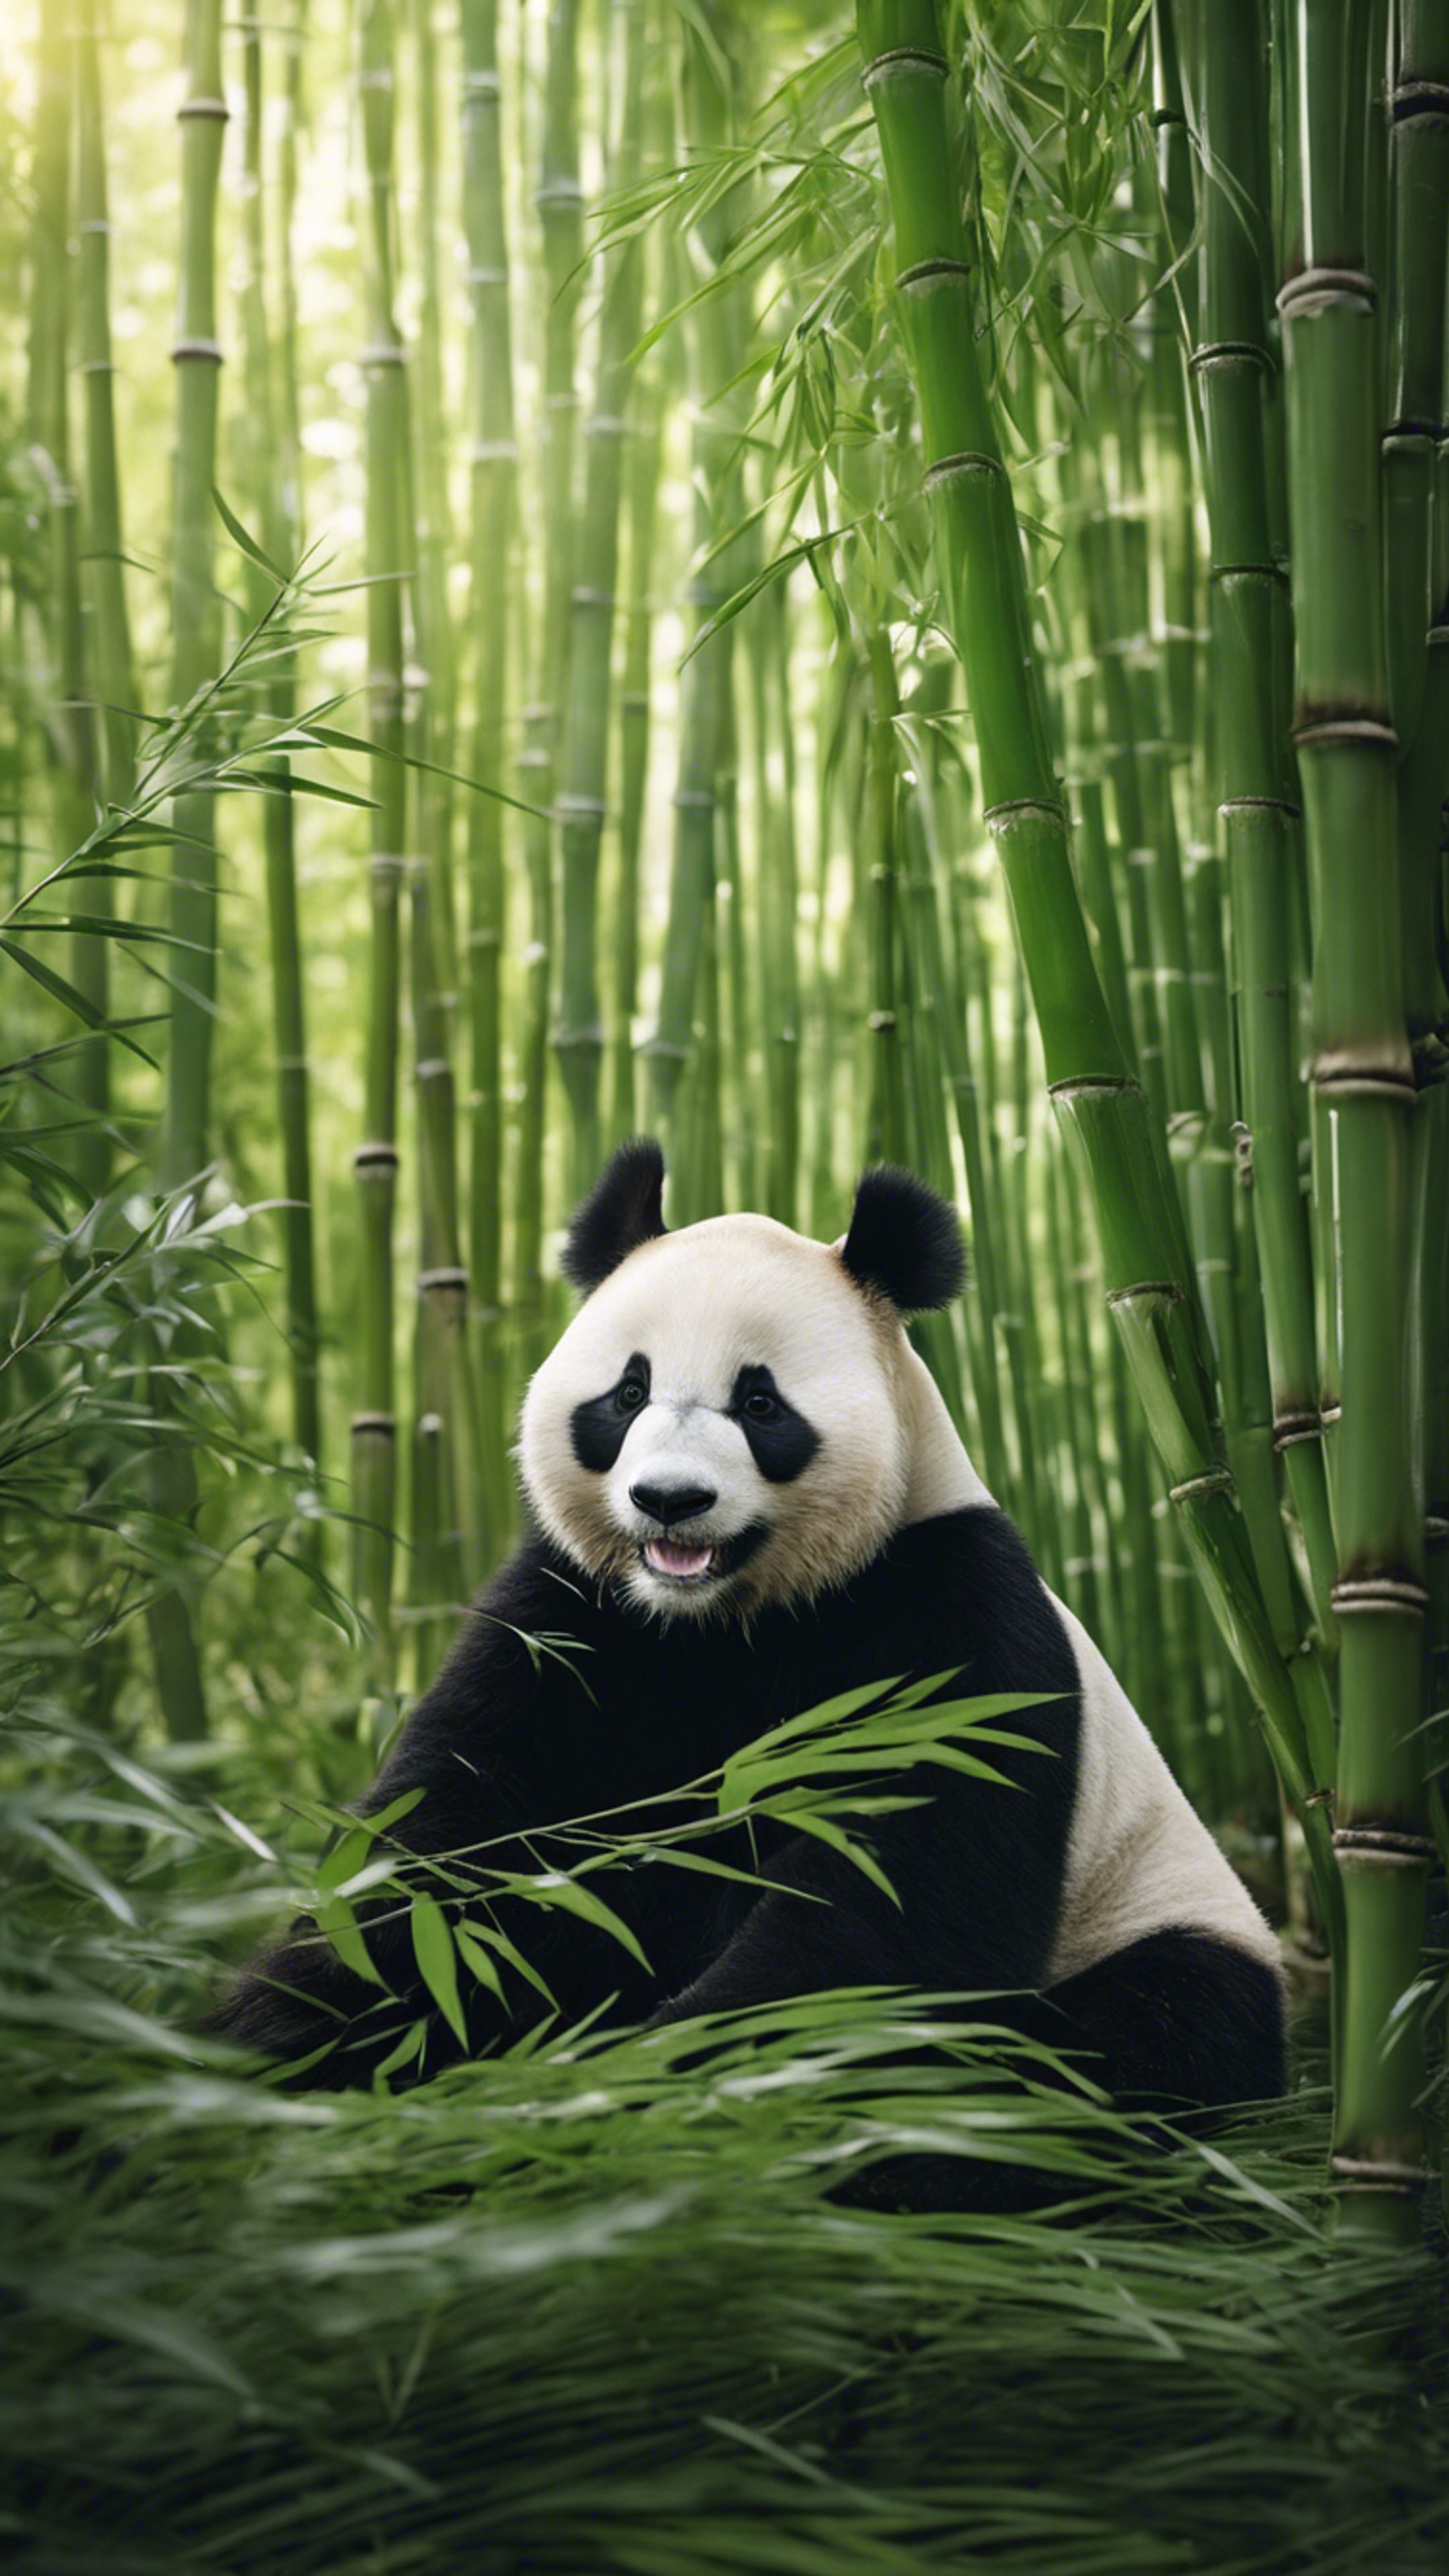 A panda bear enjoying a fresh shoot of bamboo in a mystic Chinese bamboo forest. Tapeta[b600cb92ac9945f2a443]